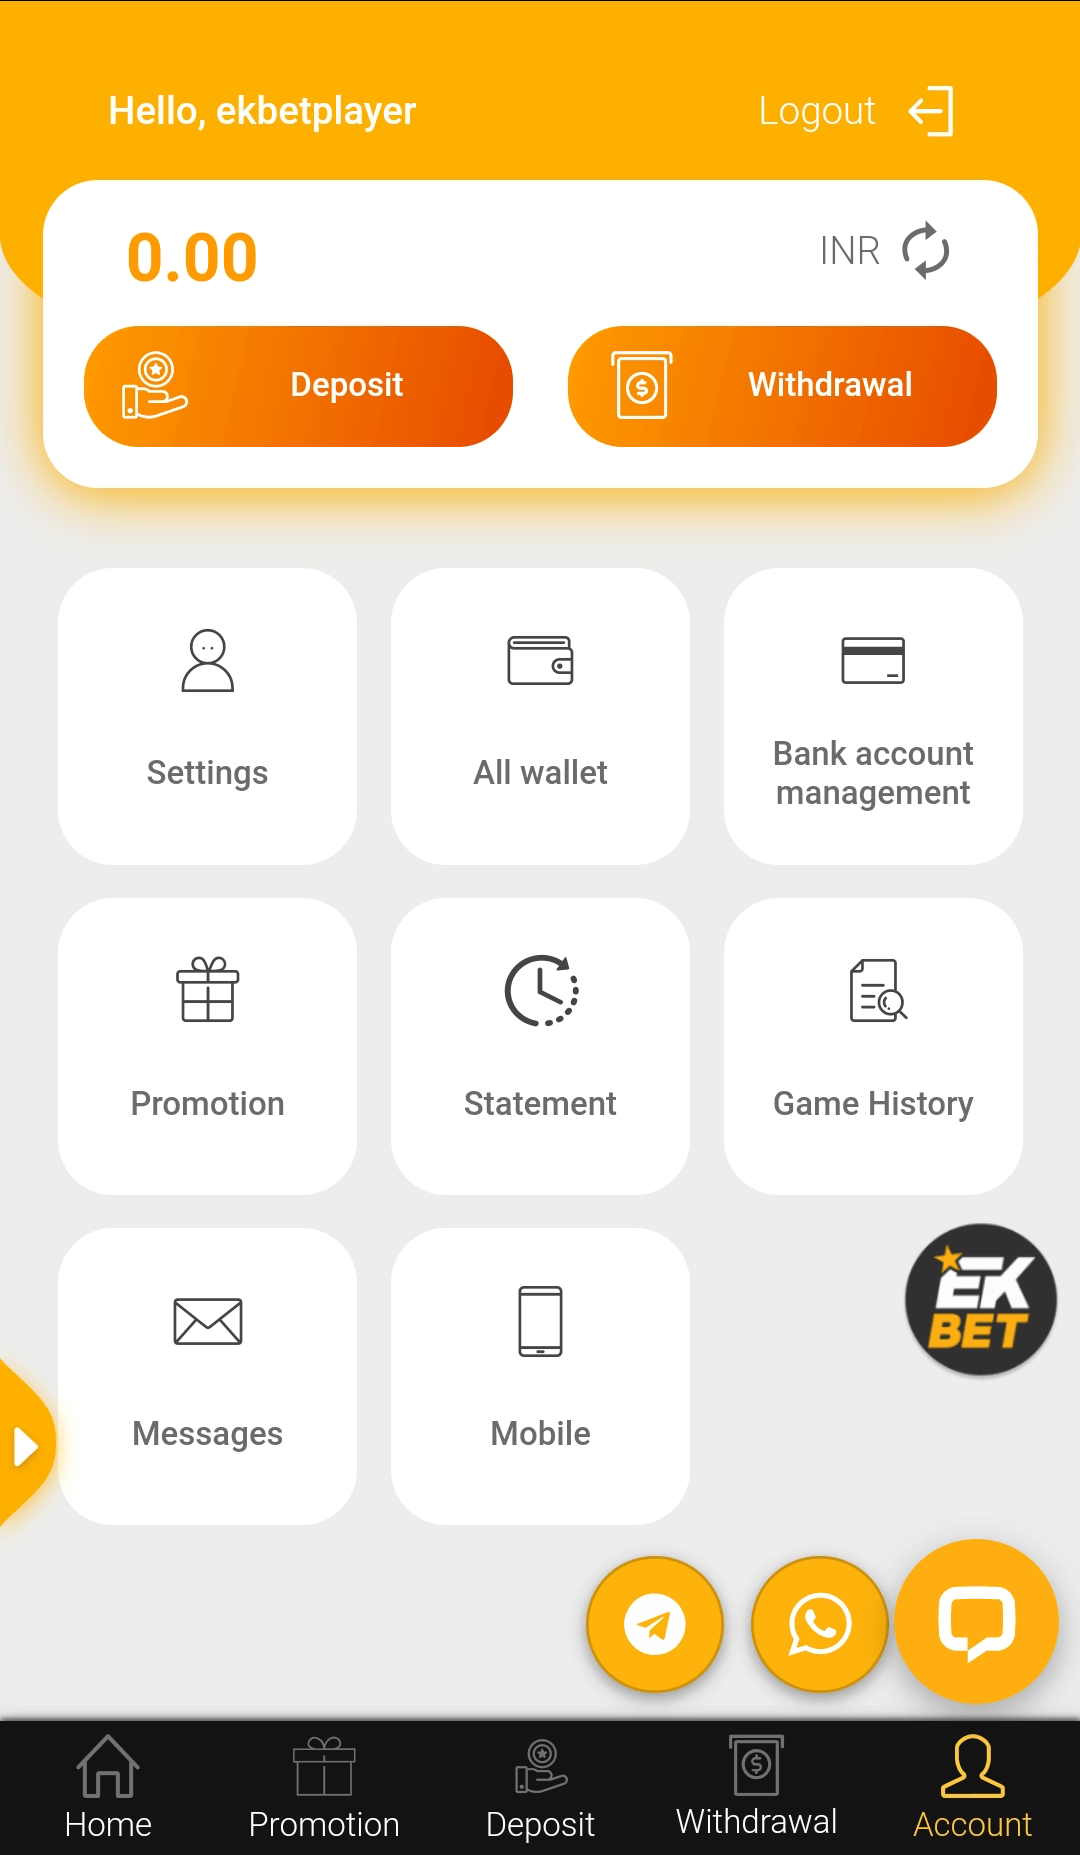 Ekbet client profile tab in the mobile app